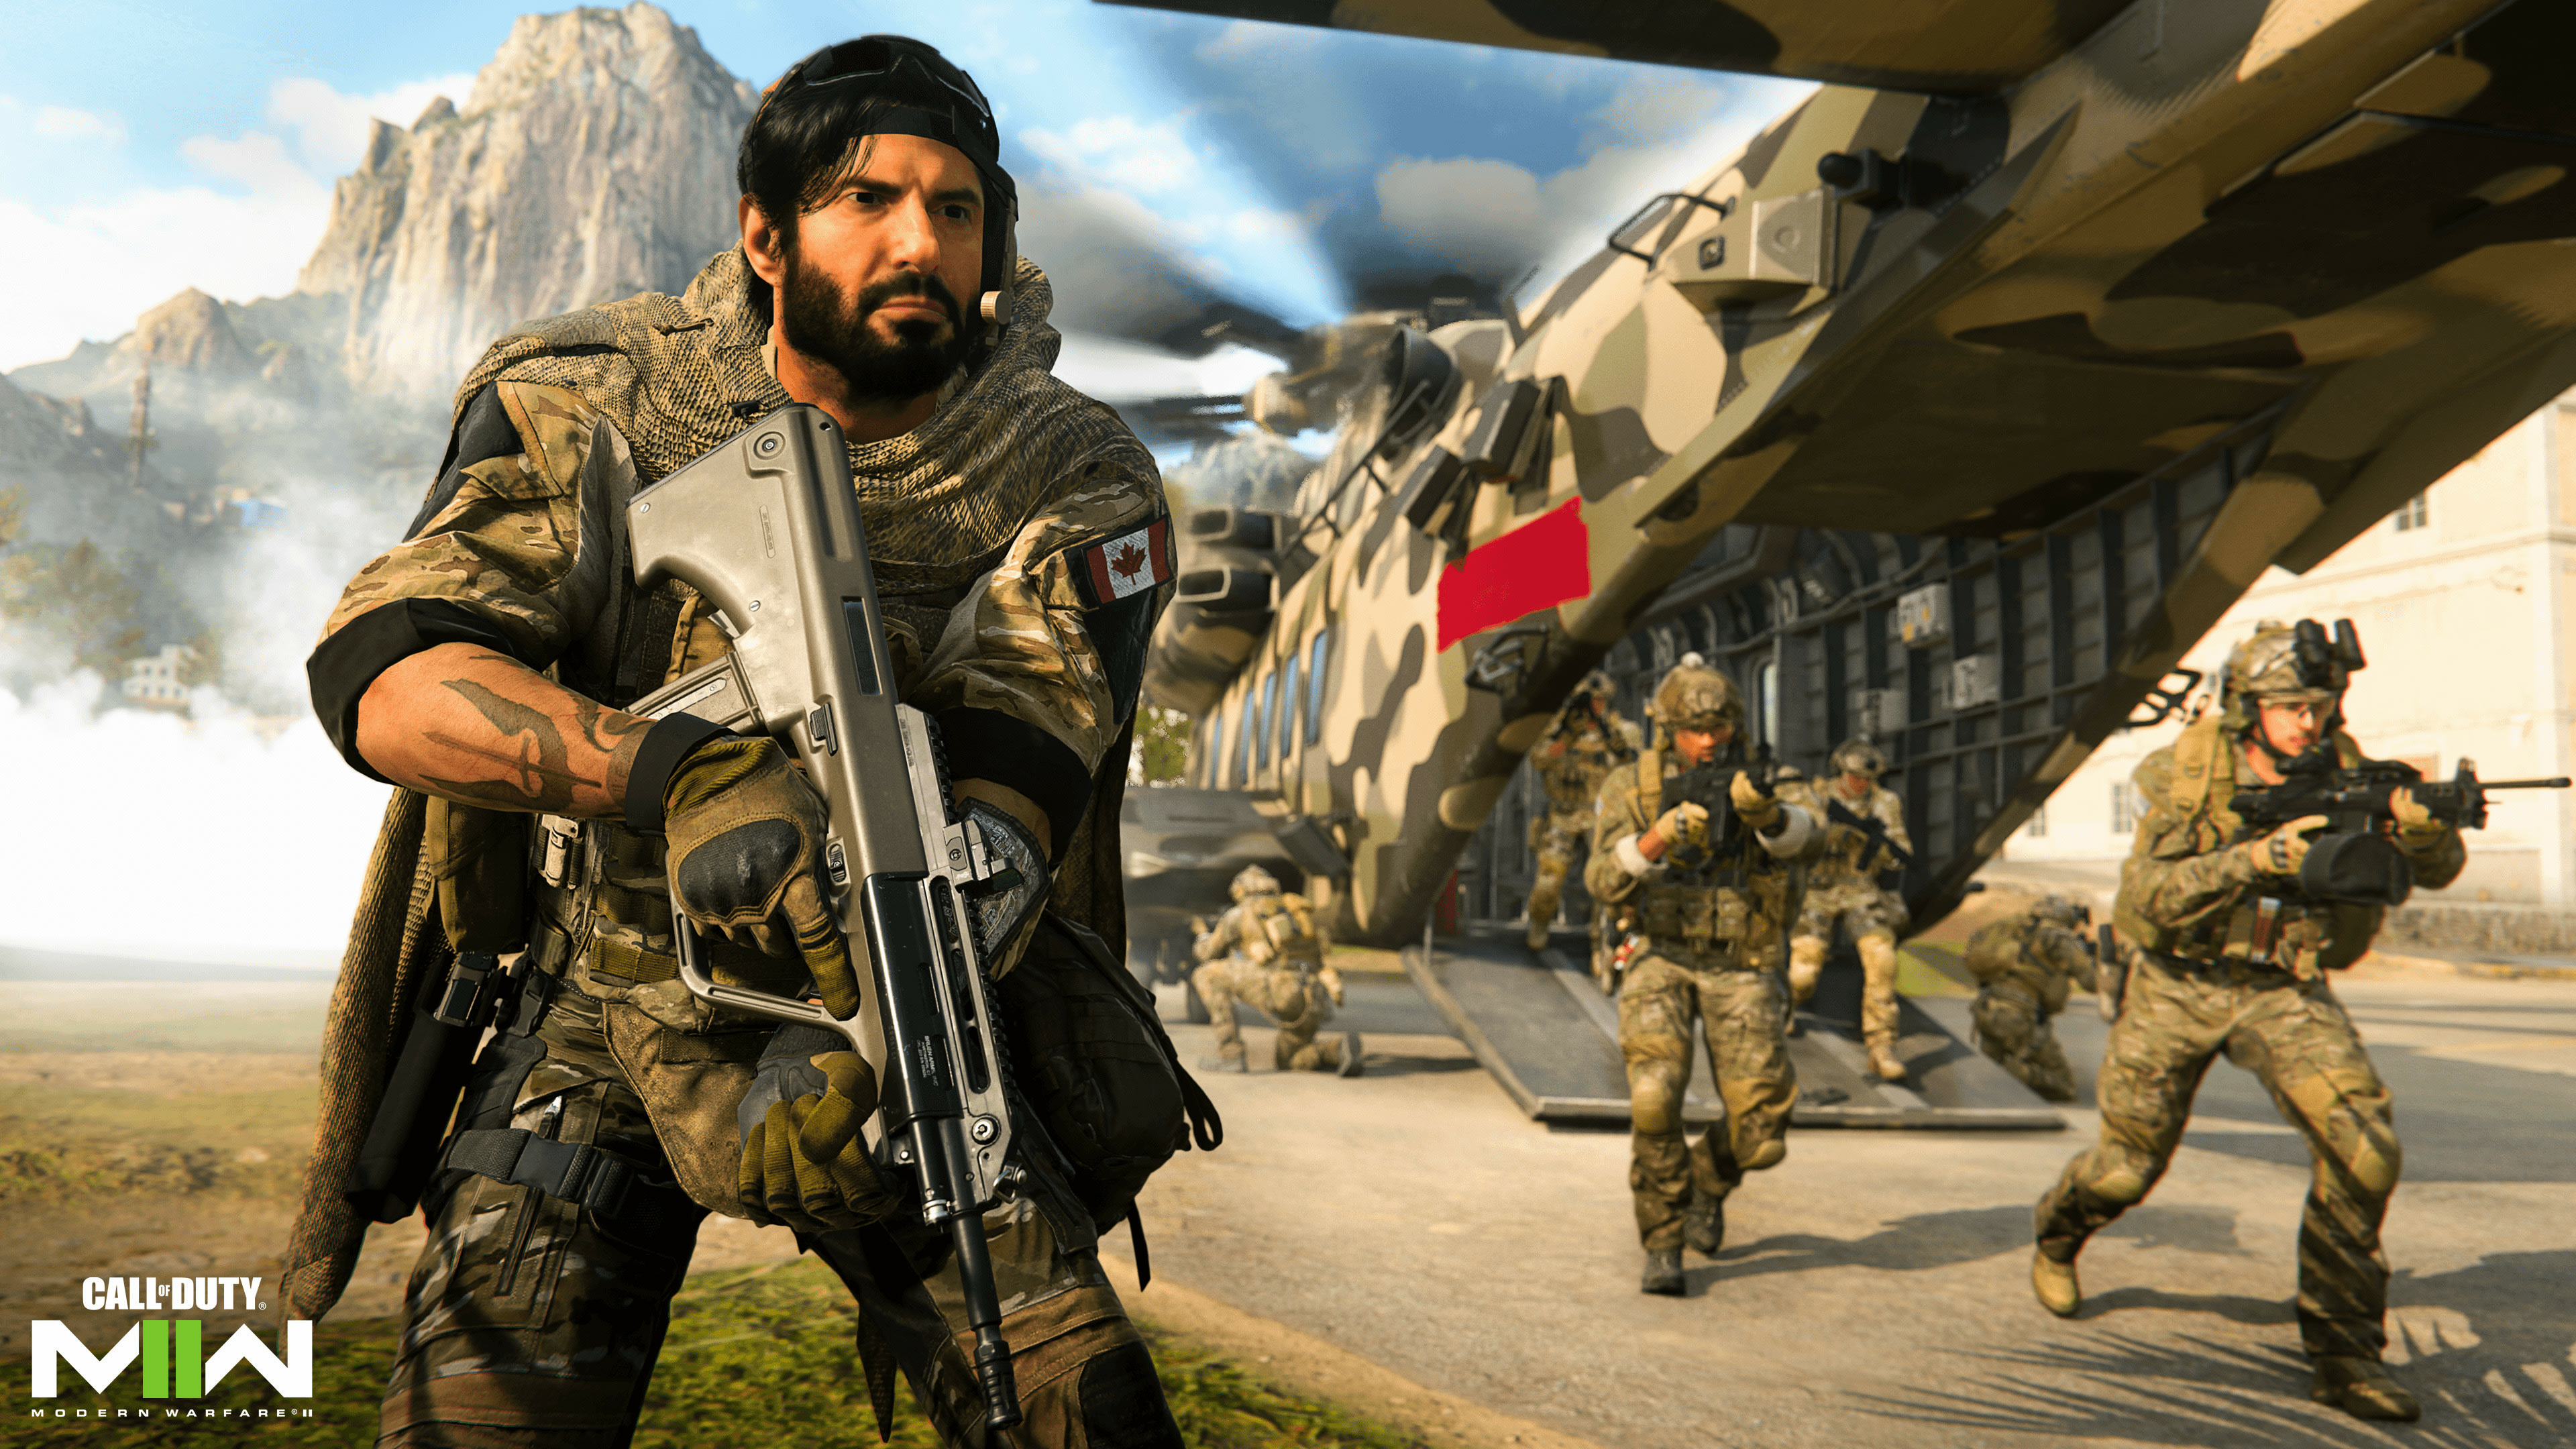 Call of Duty Modern Warfare HD Wallpapers | 4K Backgrounds - Wallpapers Den